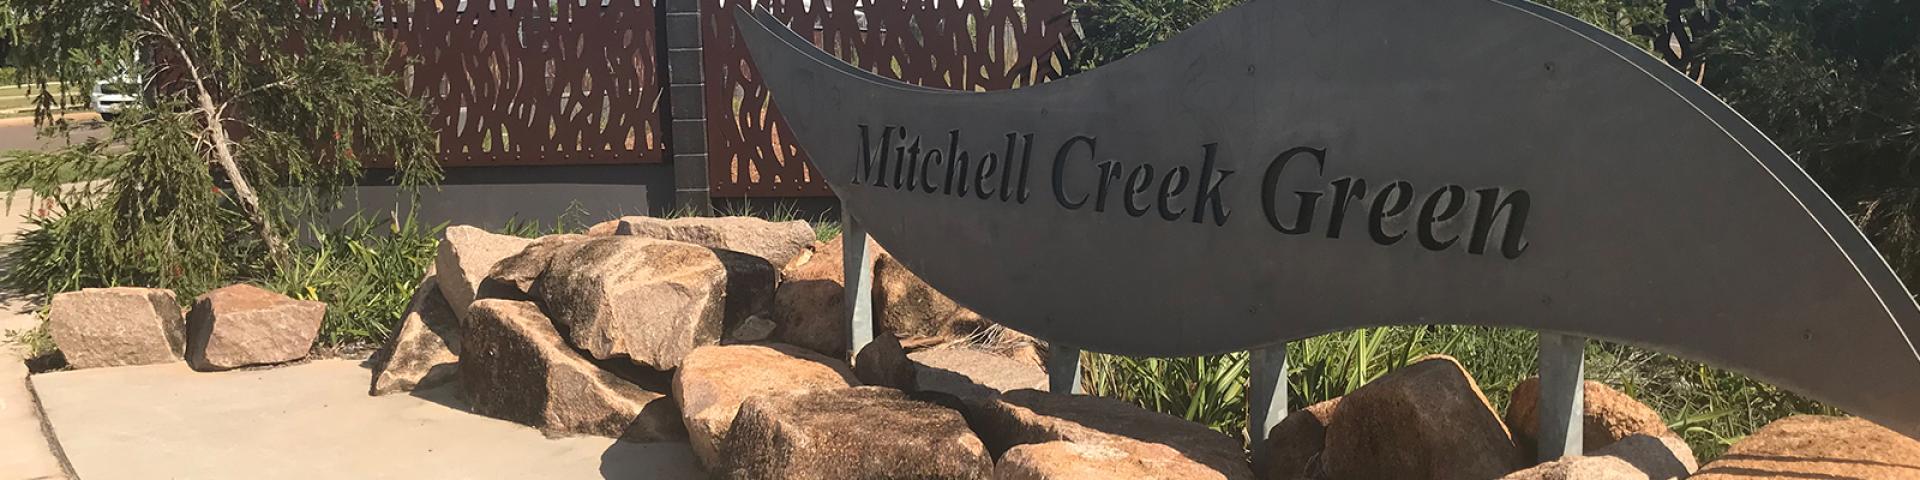 Mitchell Creek